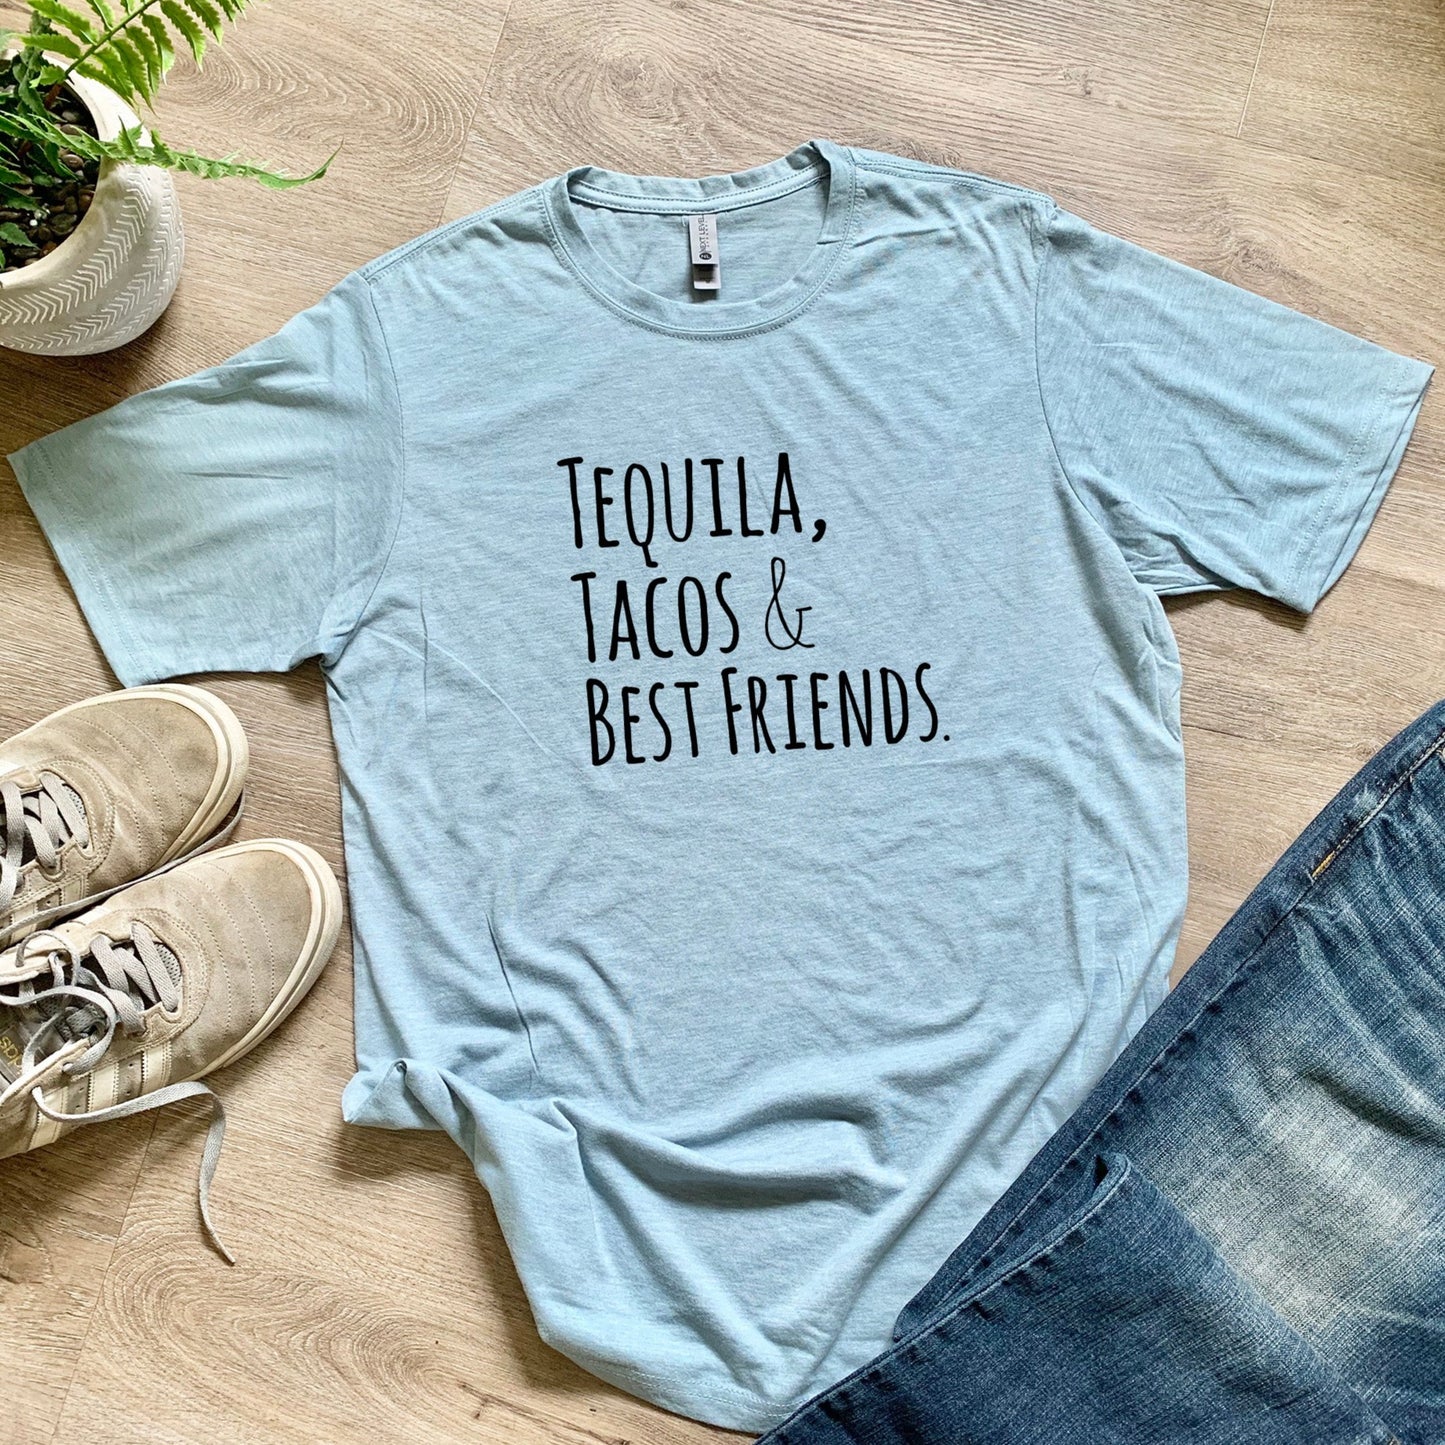 Tequila, Tacos, & Best Friends - Men's / Unisex Tee - Stonewash Blue or Sage